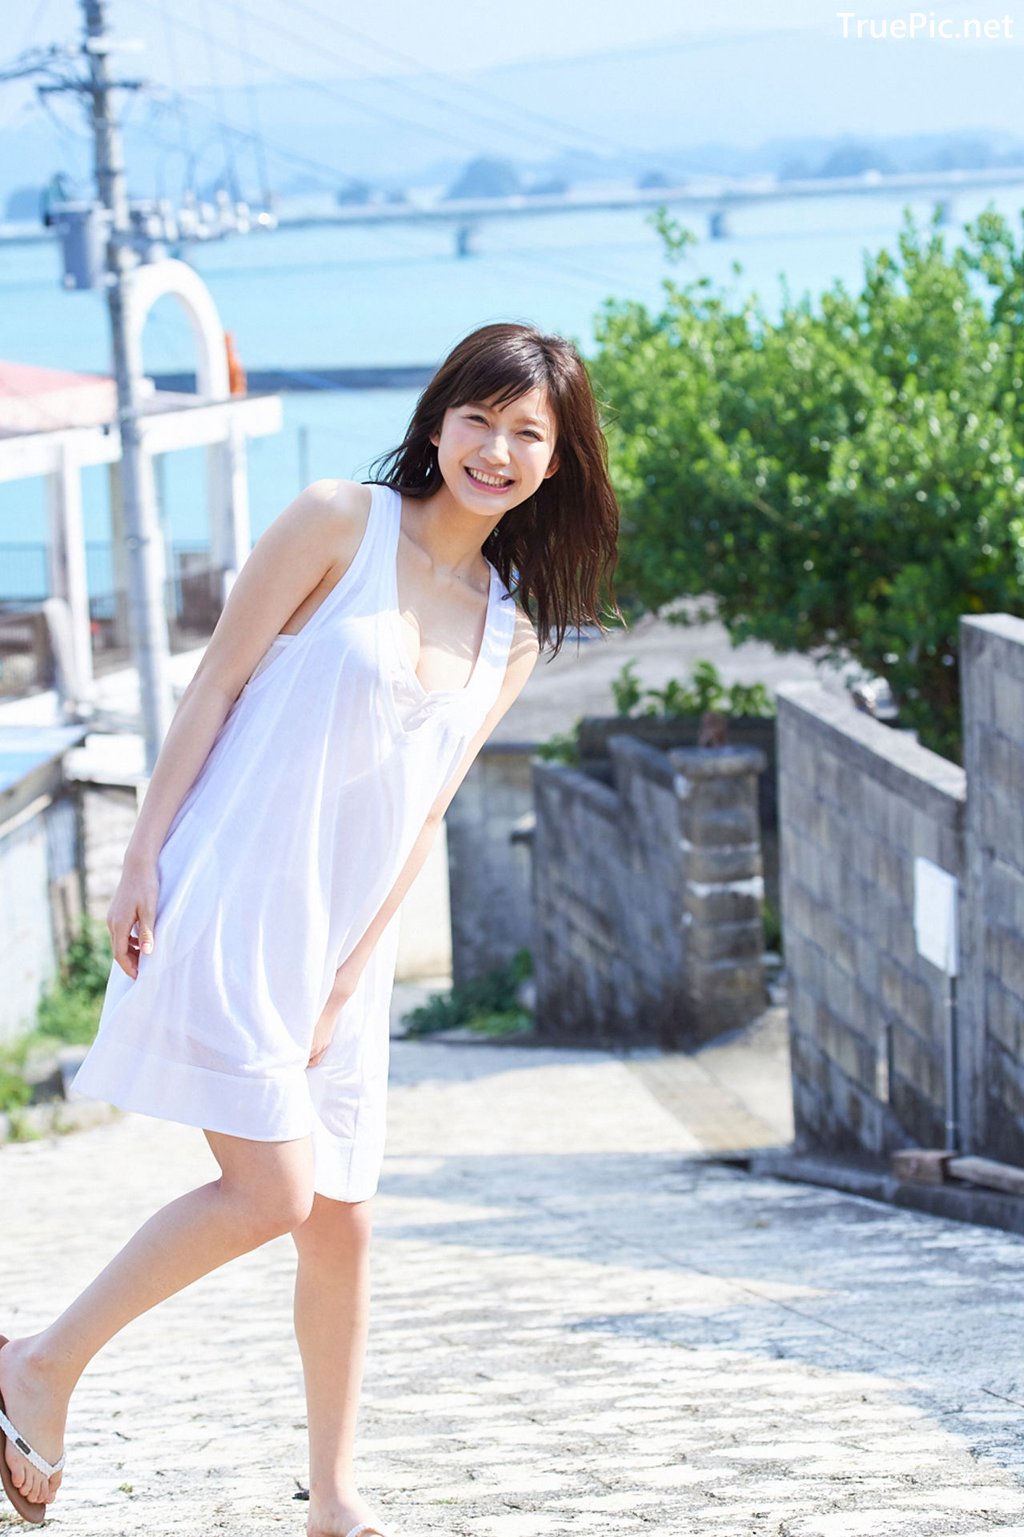 Image-Japanese-Gravure-Idol-Yuka-Ogura-Perfect-Body-On-Digital-Photobook-TruePic.net- Picture-56